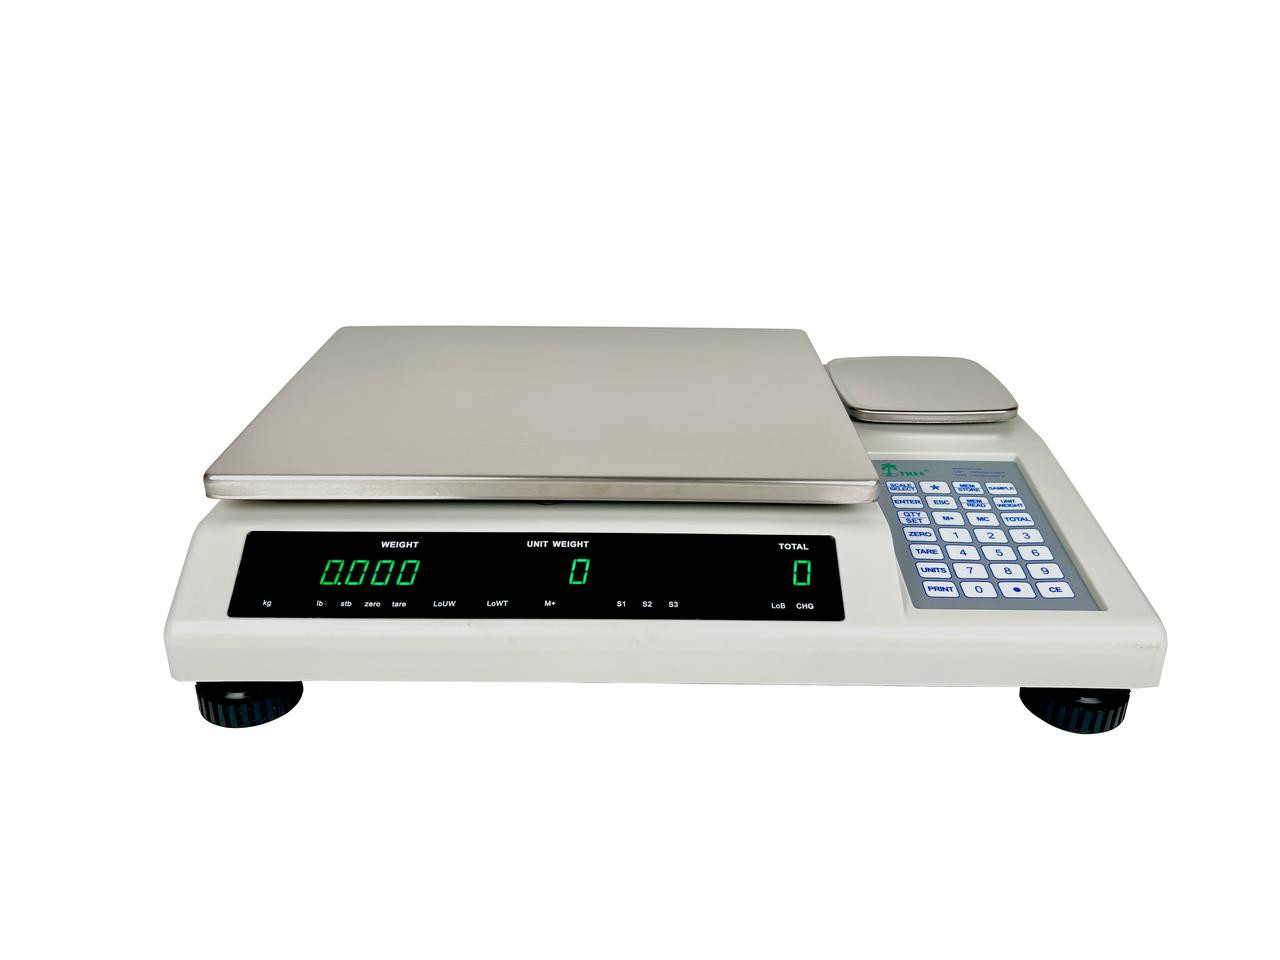 CAS SC-25P Digital Counting Scale 50 lb x 0 01 lb